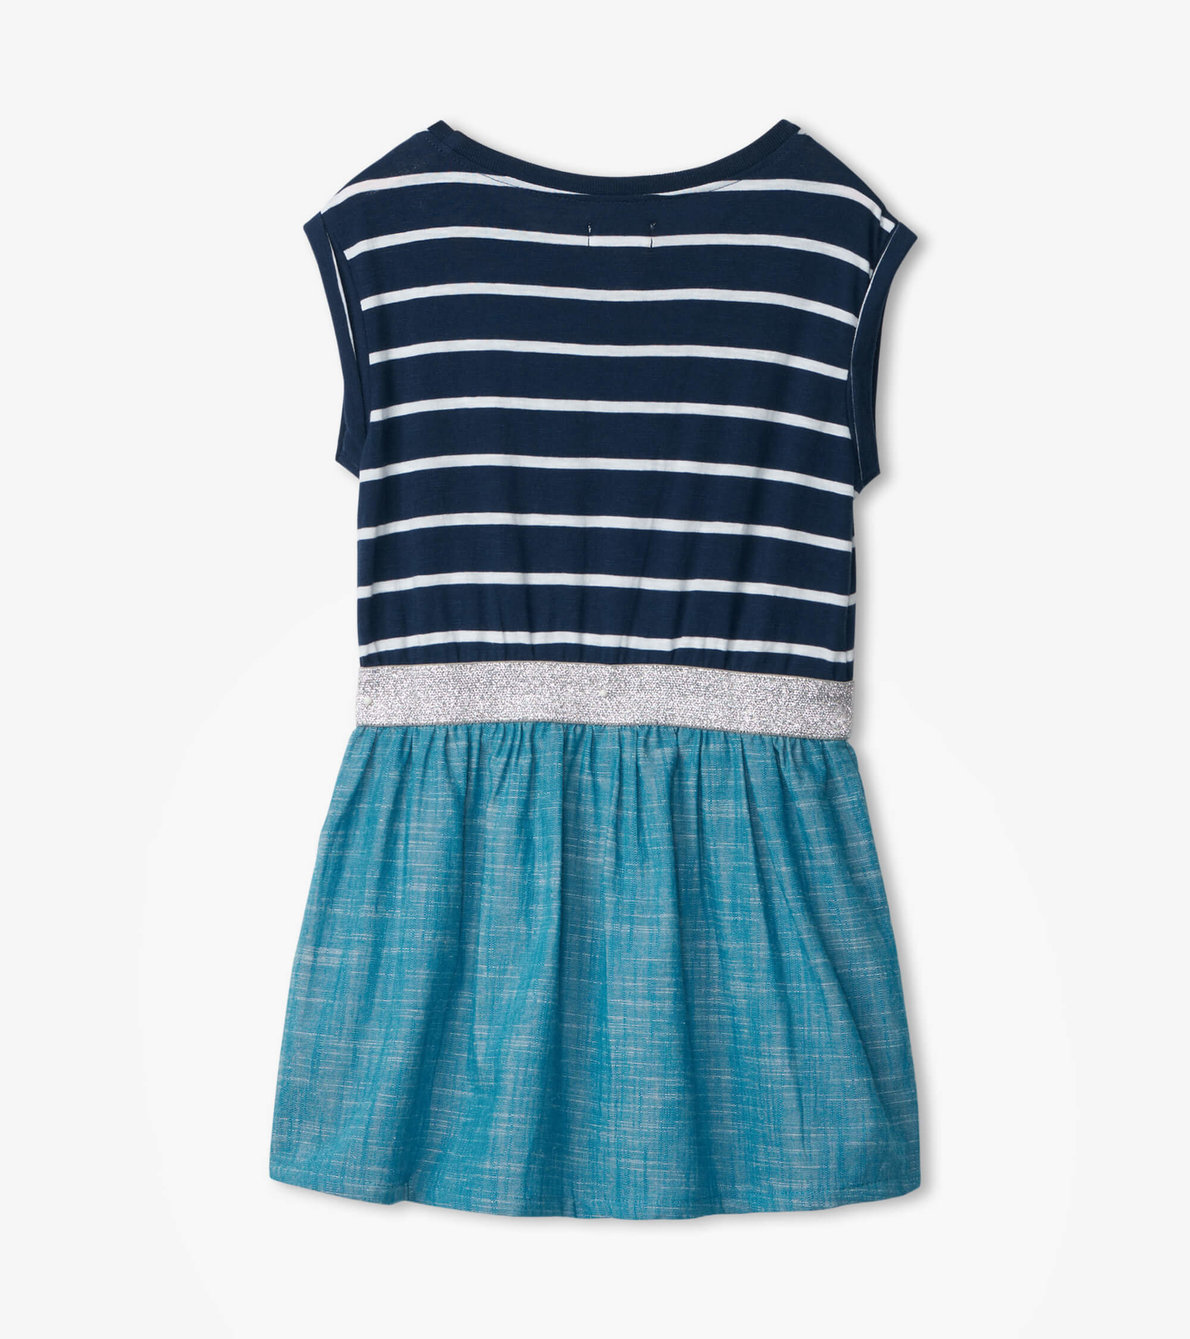 View larger image of Nautical Stripes Elastic Waist Dress